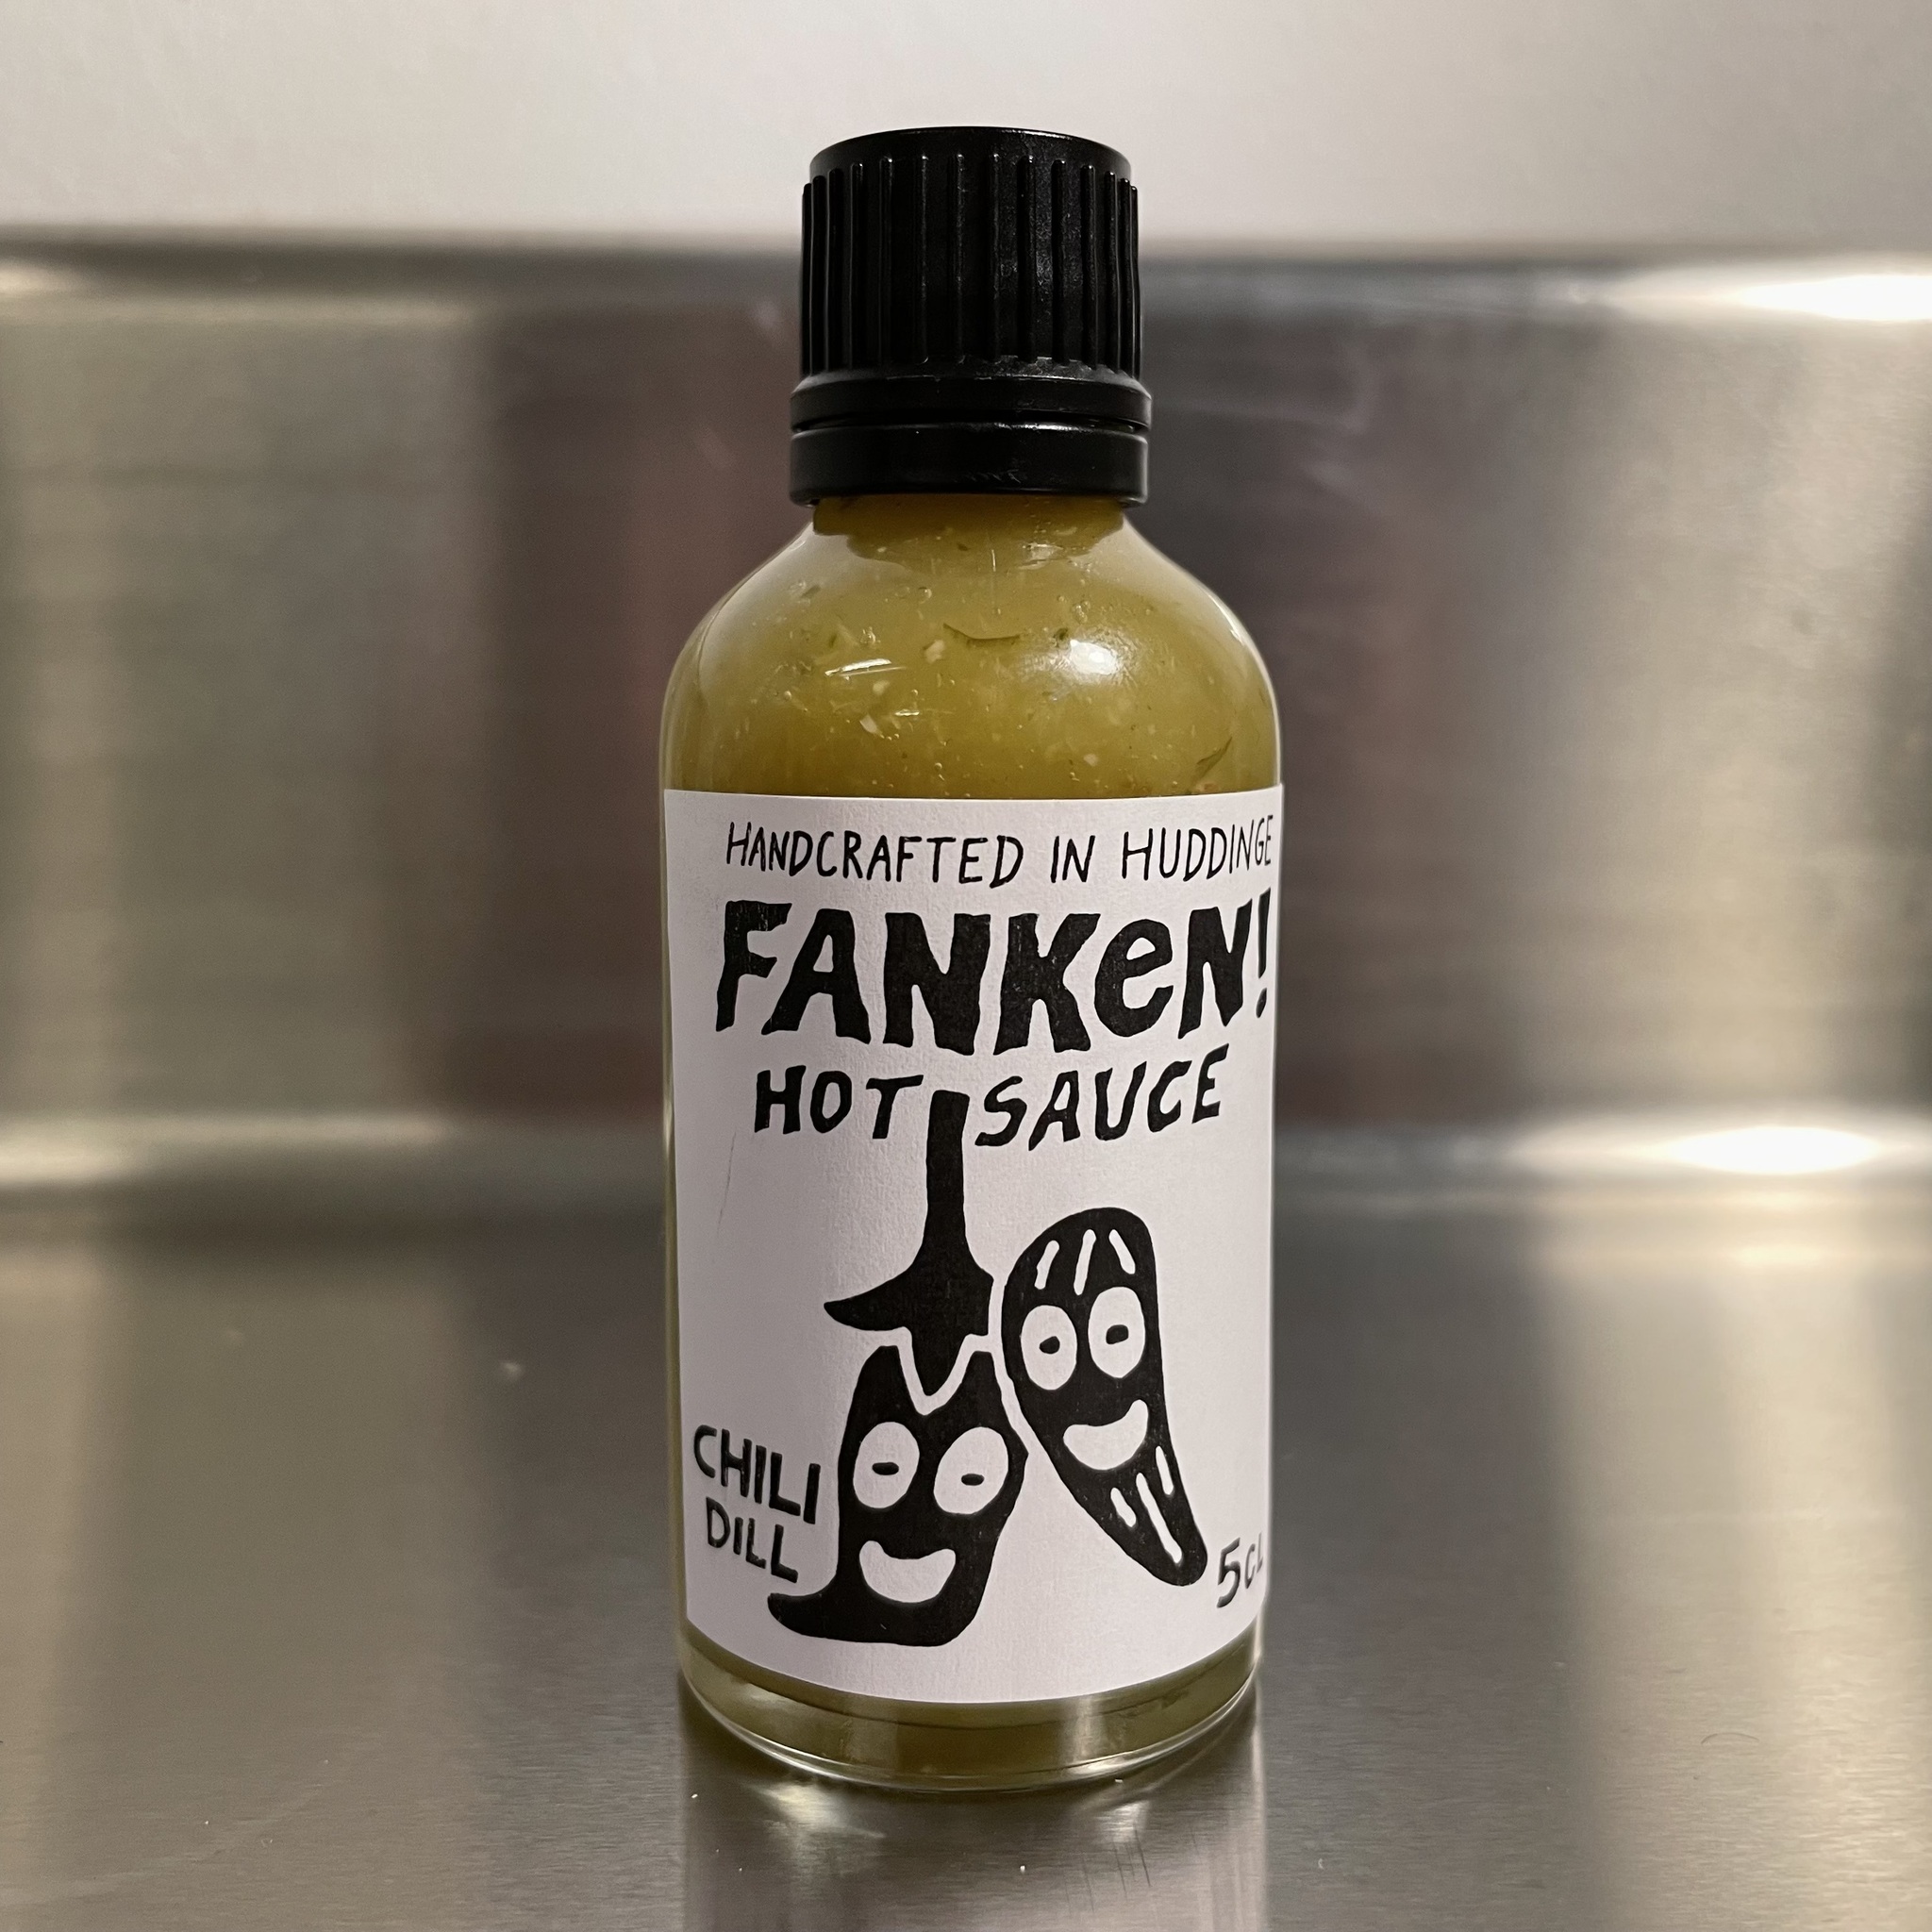 Fanken! Chili Dill - Dill Pickle Hotsauce